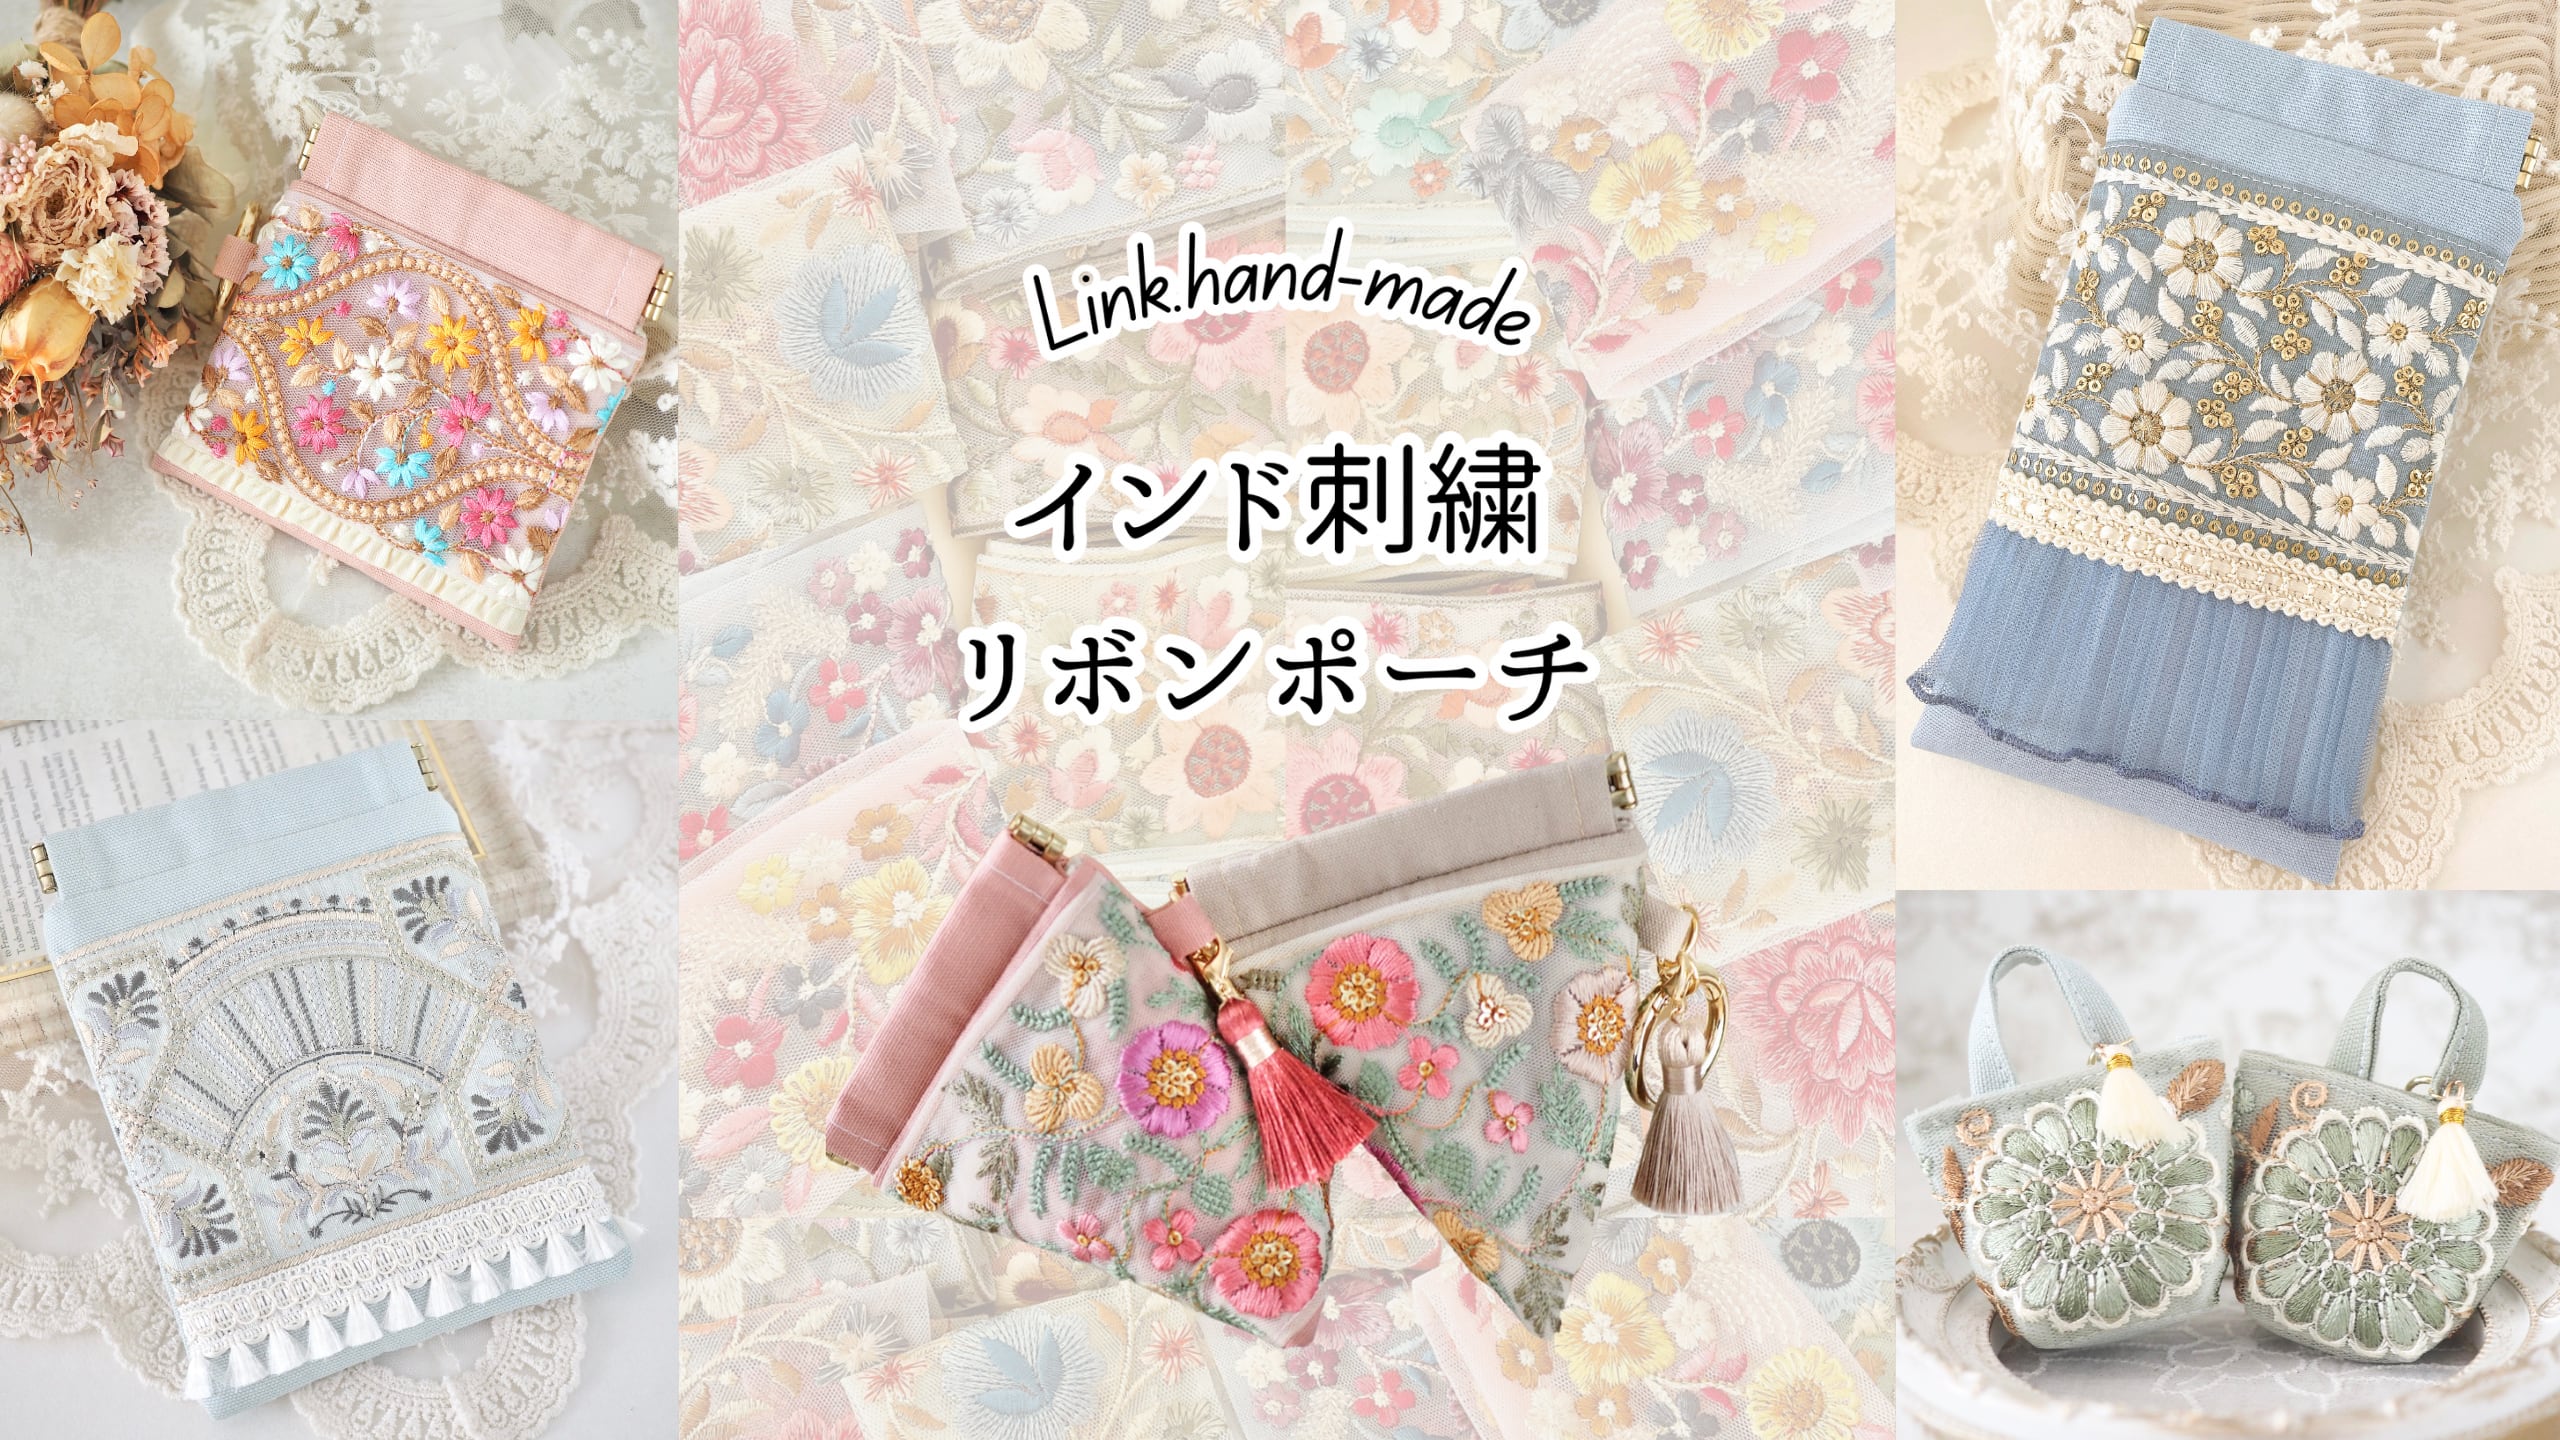 Link.hand-made